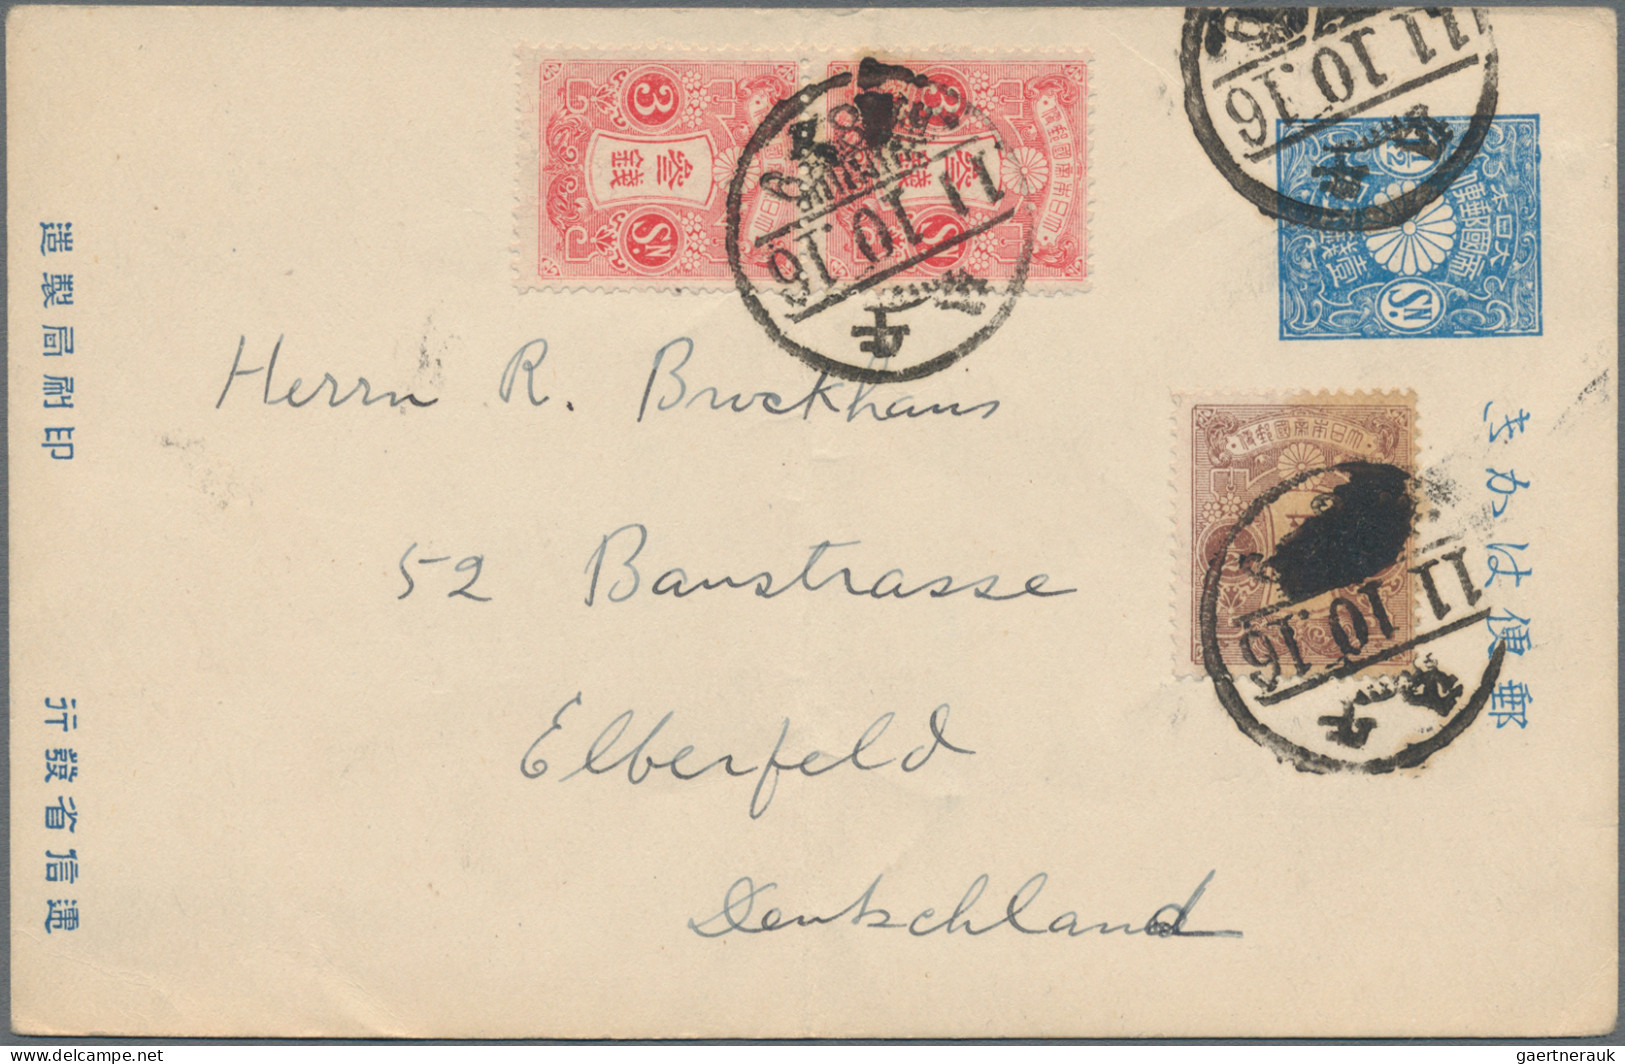 Japan - Postal stationary: 1874/1915, apprx. 66 used only stationeries inc. upra